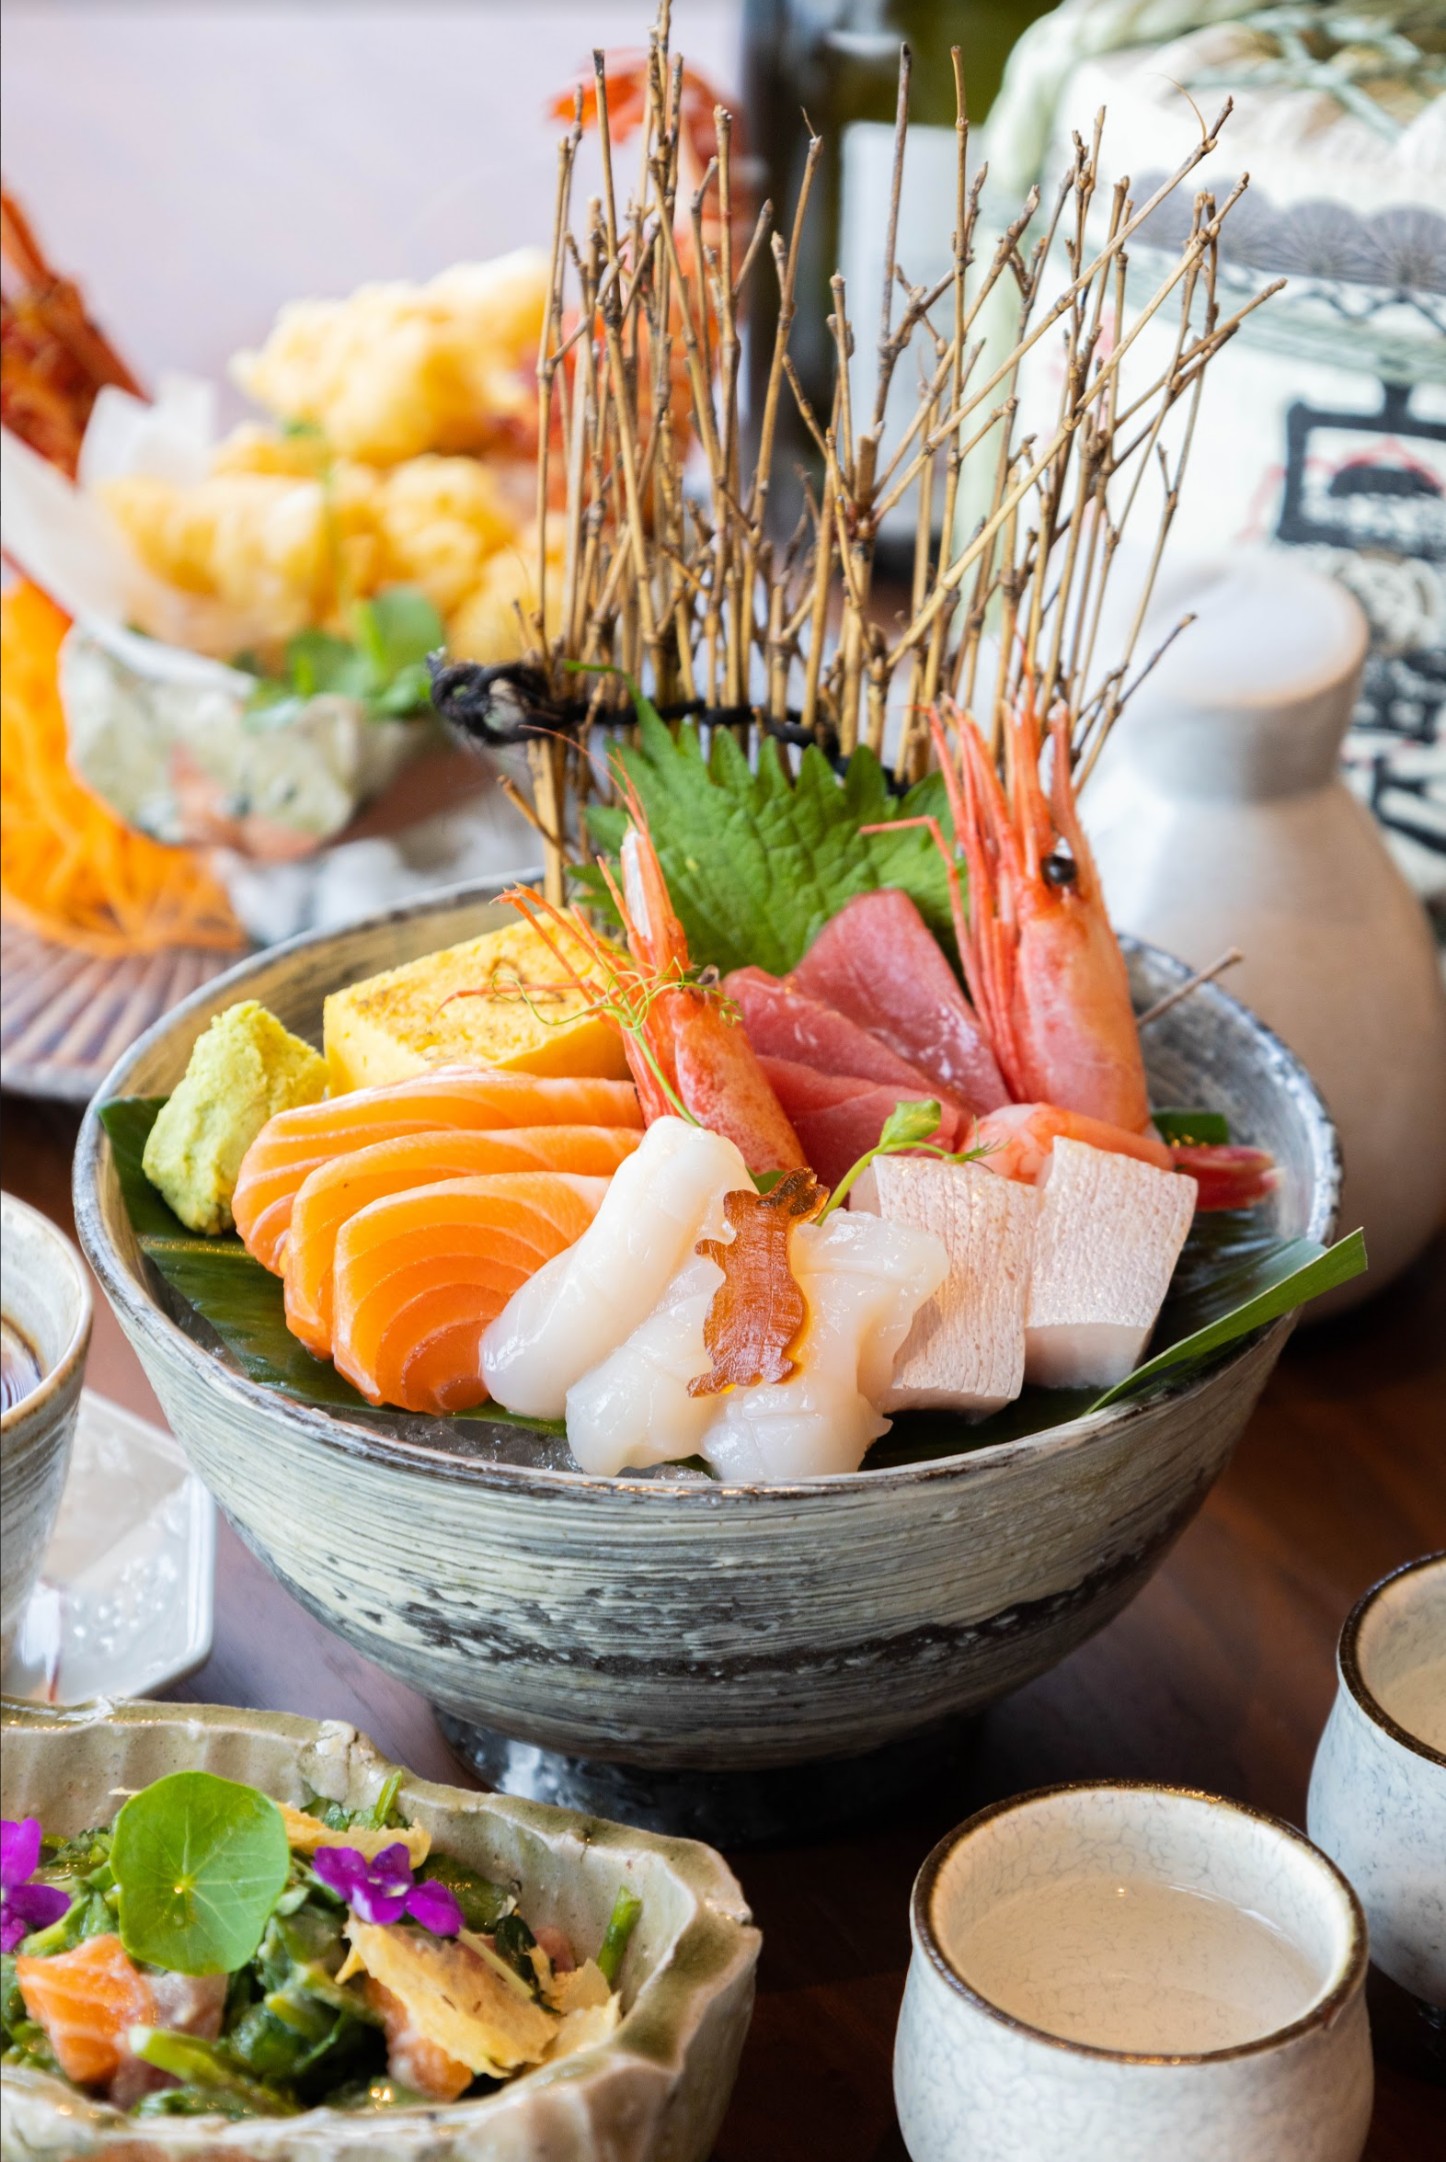 Alila Villas Uluwatu Presents an Exquisite Experience of Japanese Cuisine